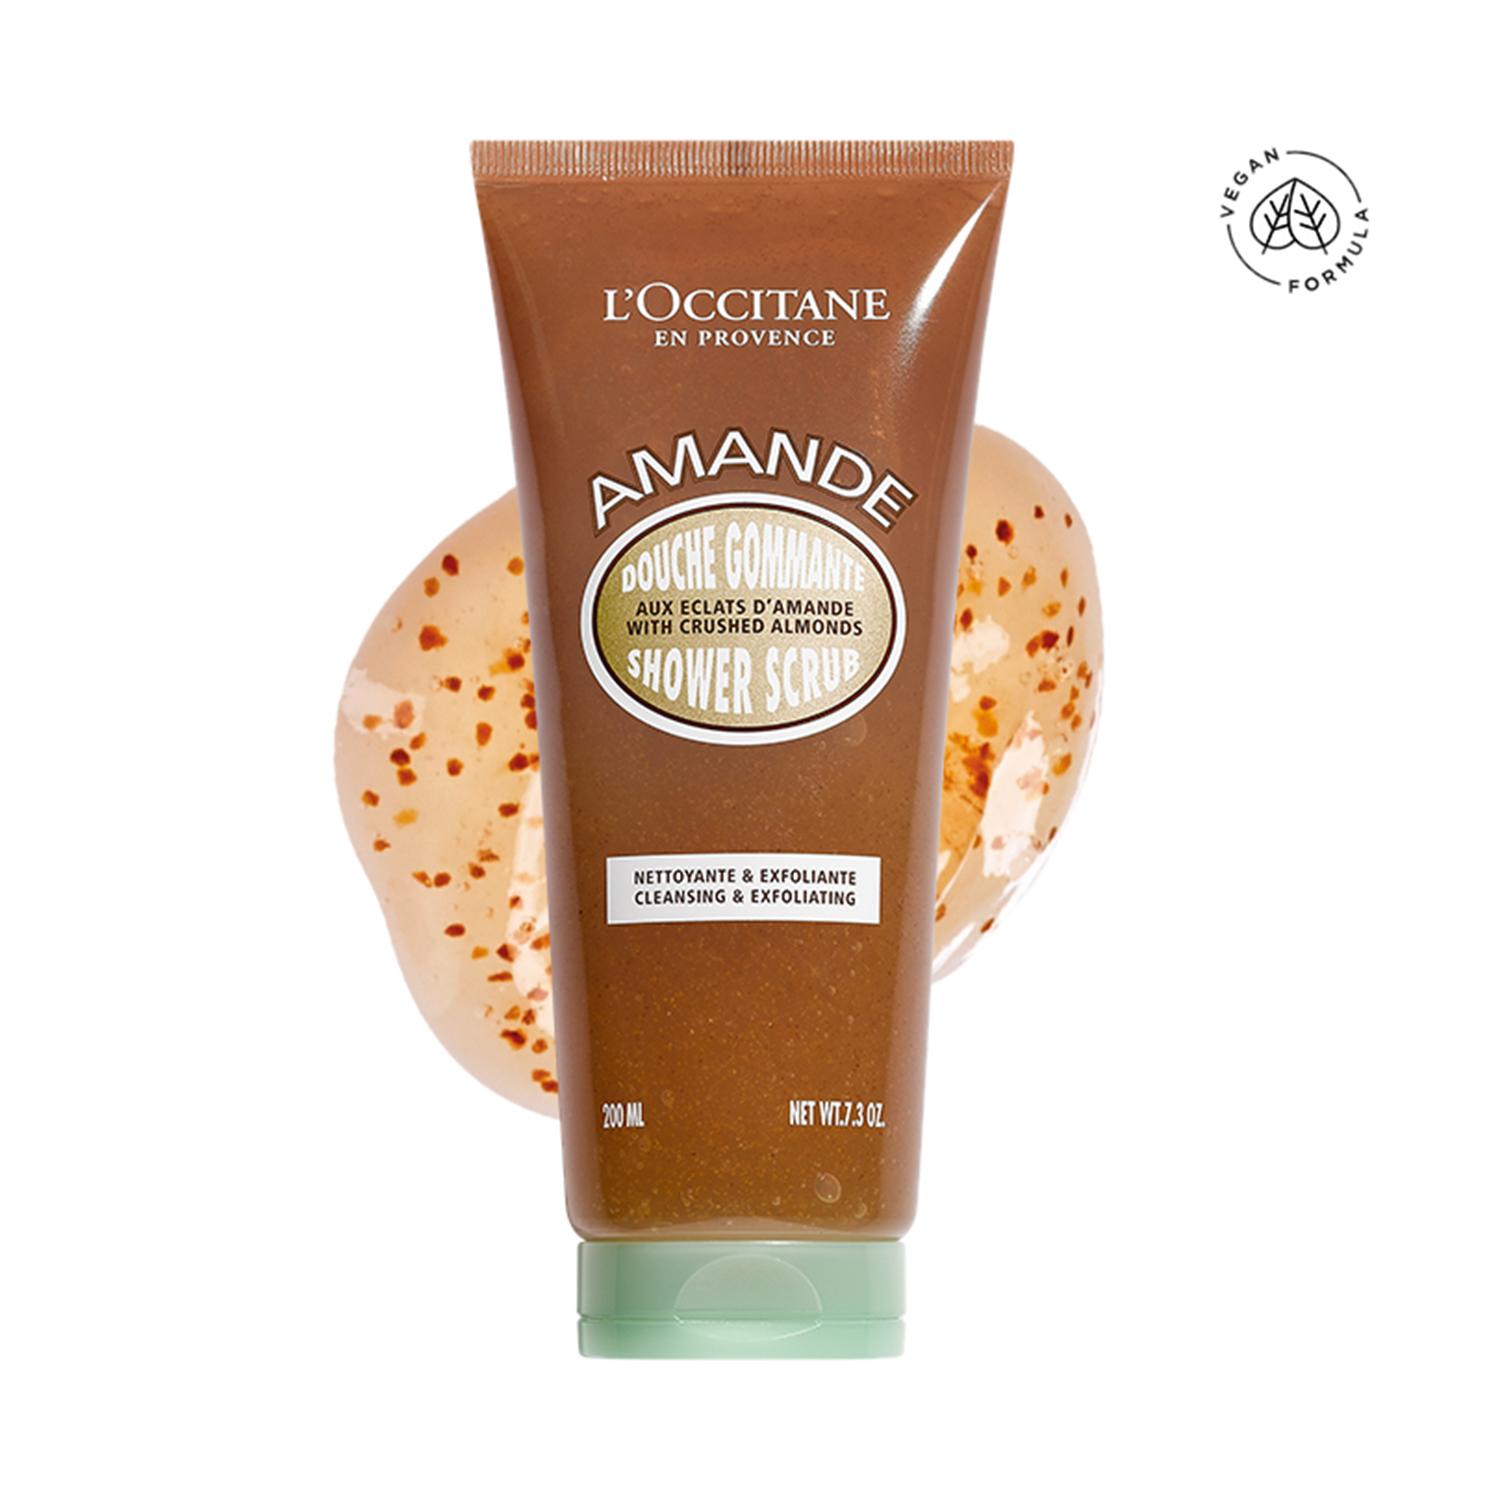 L'occitane | L'occitane Almond Nettoyante & Exfoliante, Cleansing & Exfoliating Shower Scrub (200ml)